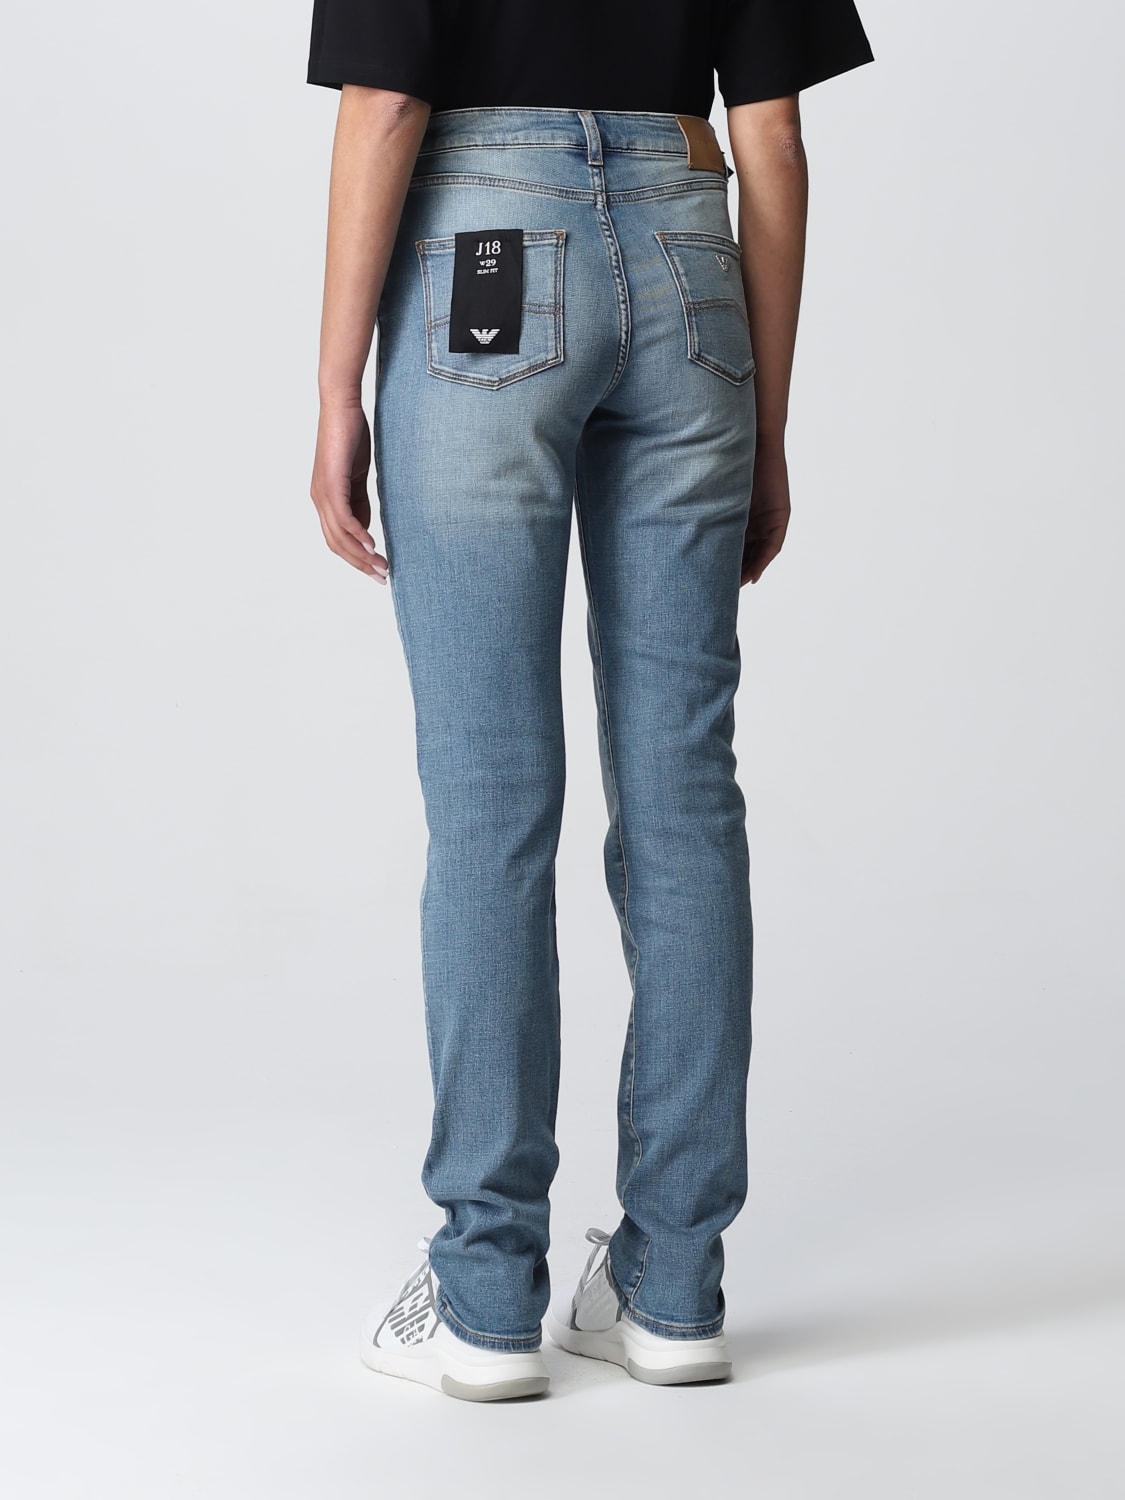 Emporio Armani Outlet: jeans washed - Denim | Emporio Armani jeans 3L2J182DQ0Z on GIGLIO.COM